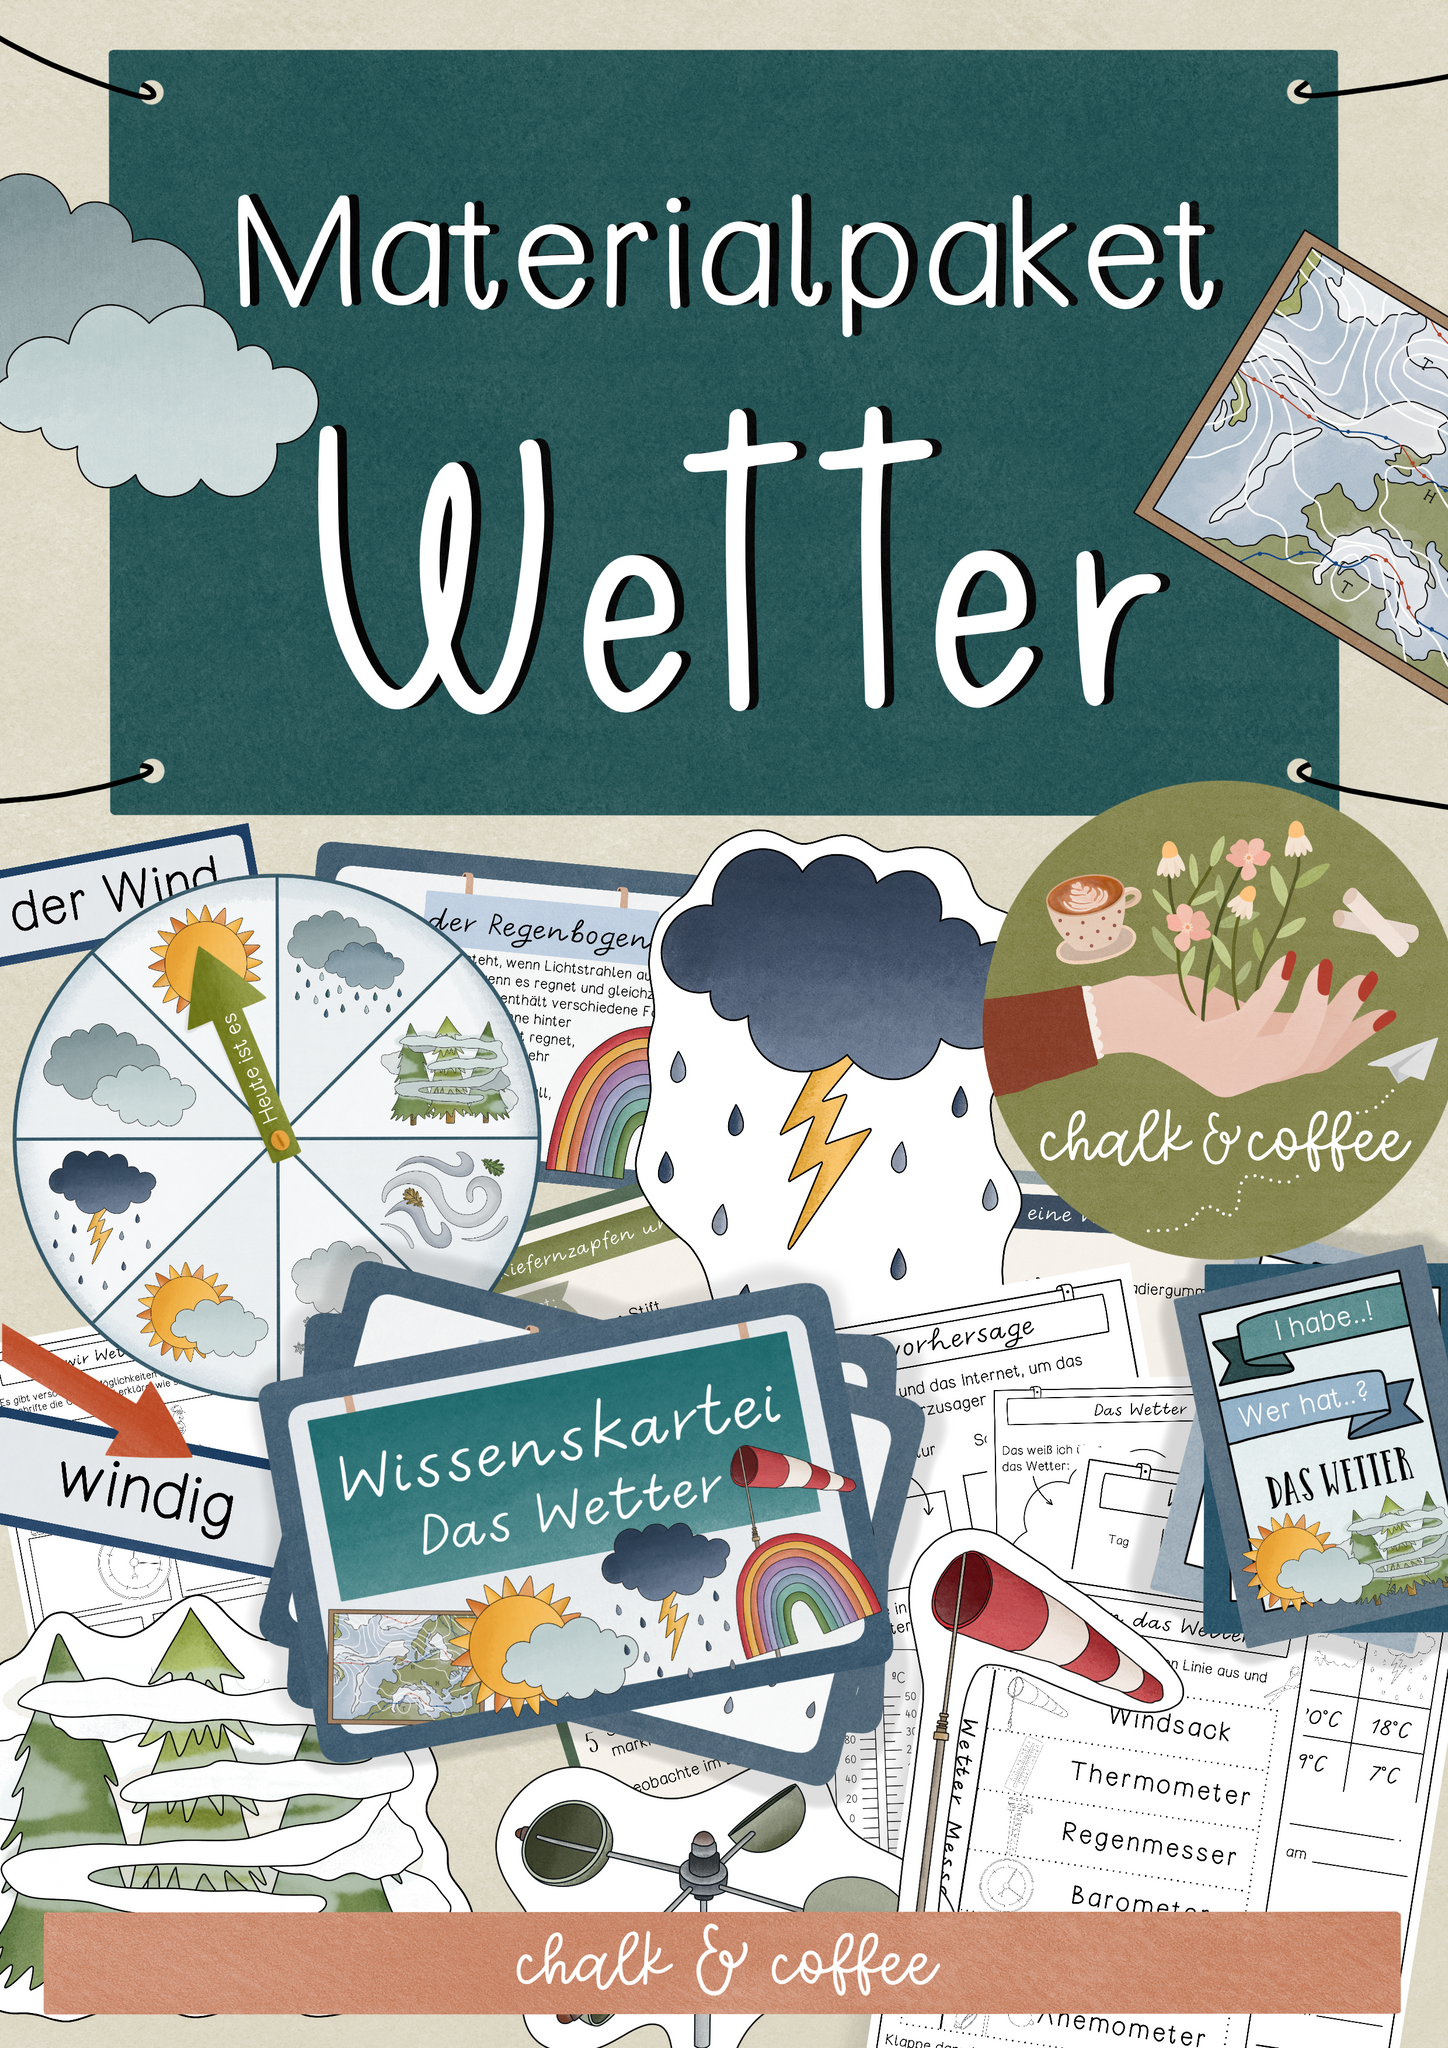 Materialpaket Wetter - Tafelmaterial, Experimente, Wissenskartei Wetterphänomene und Messgeräte